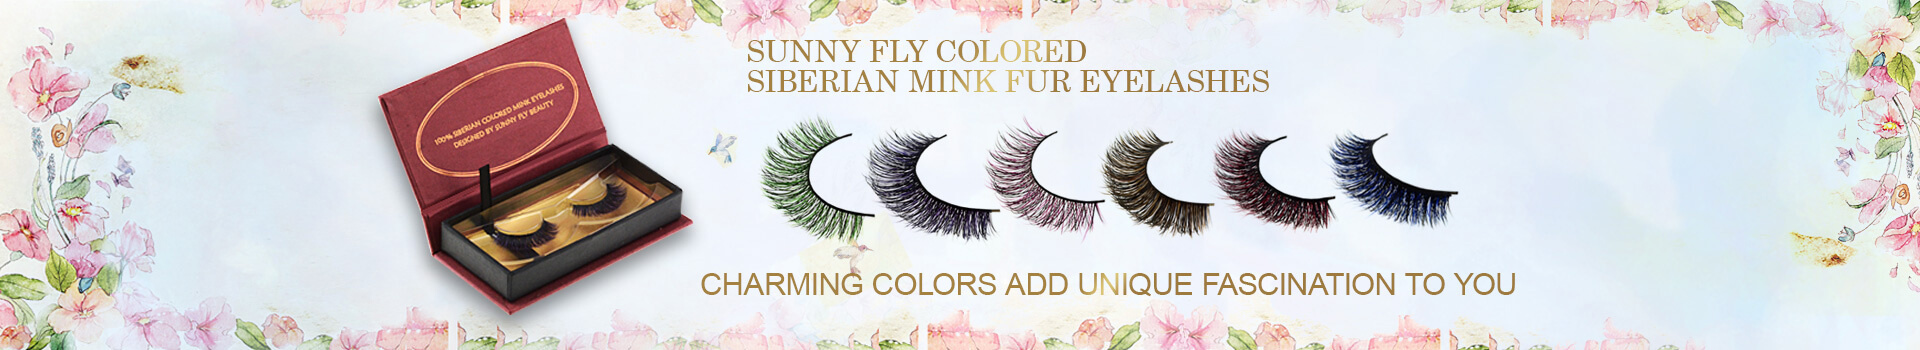 Farget Siberian Mink Fur Eyelashes MC46